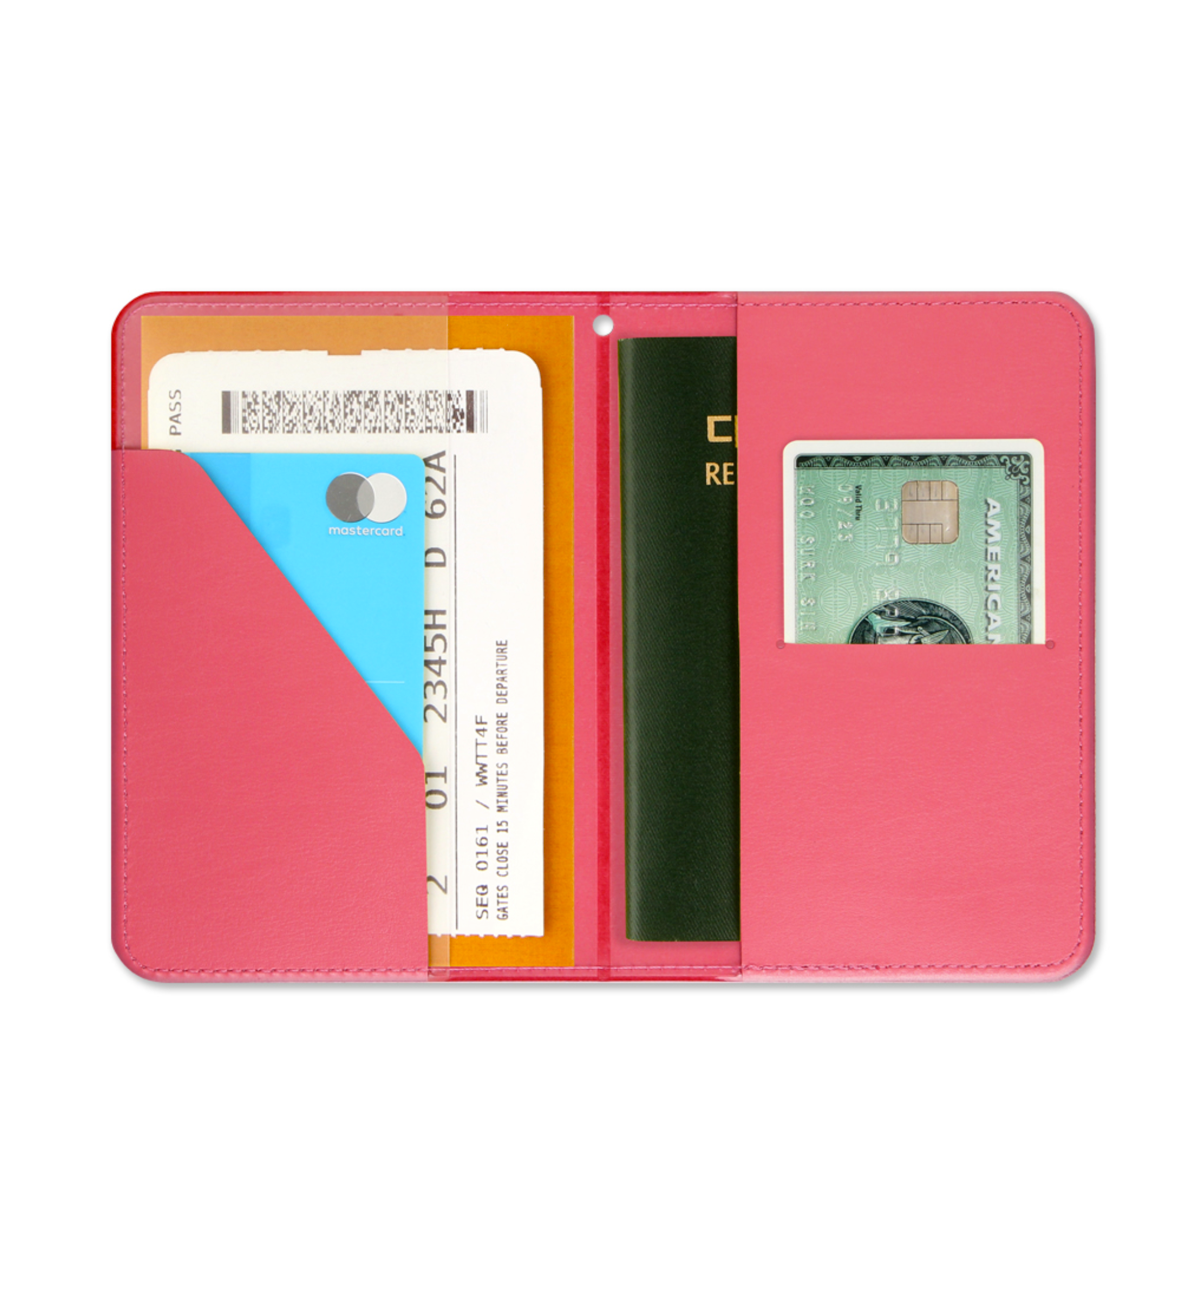 BT21 Minini Leather Patch Passport Cover [Korea Best Seller Item]